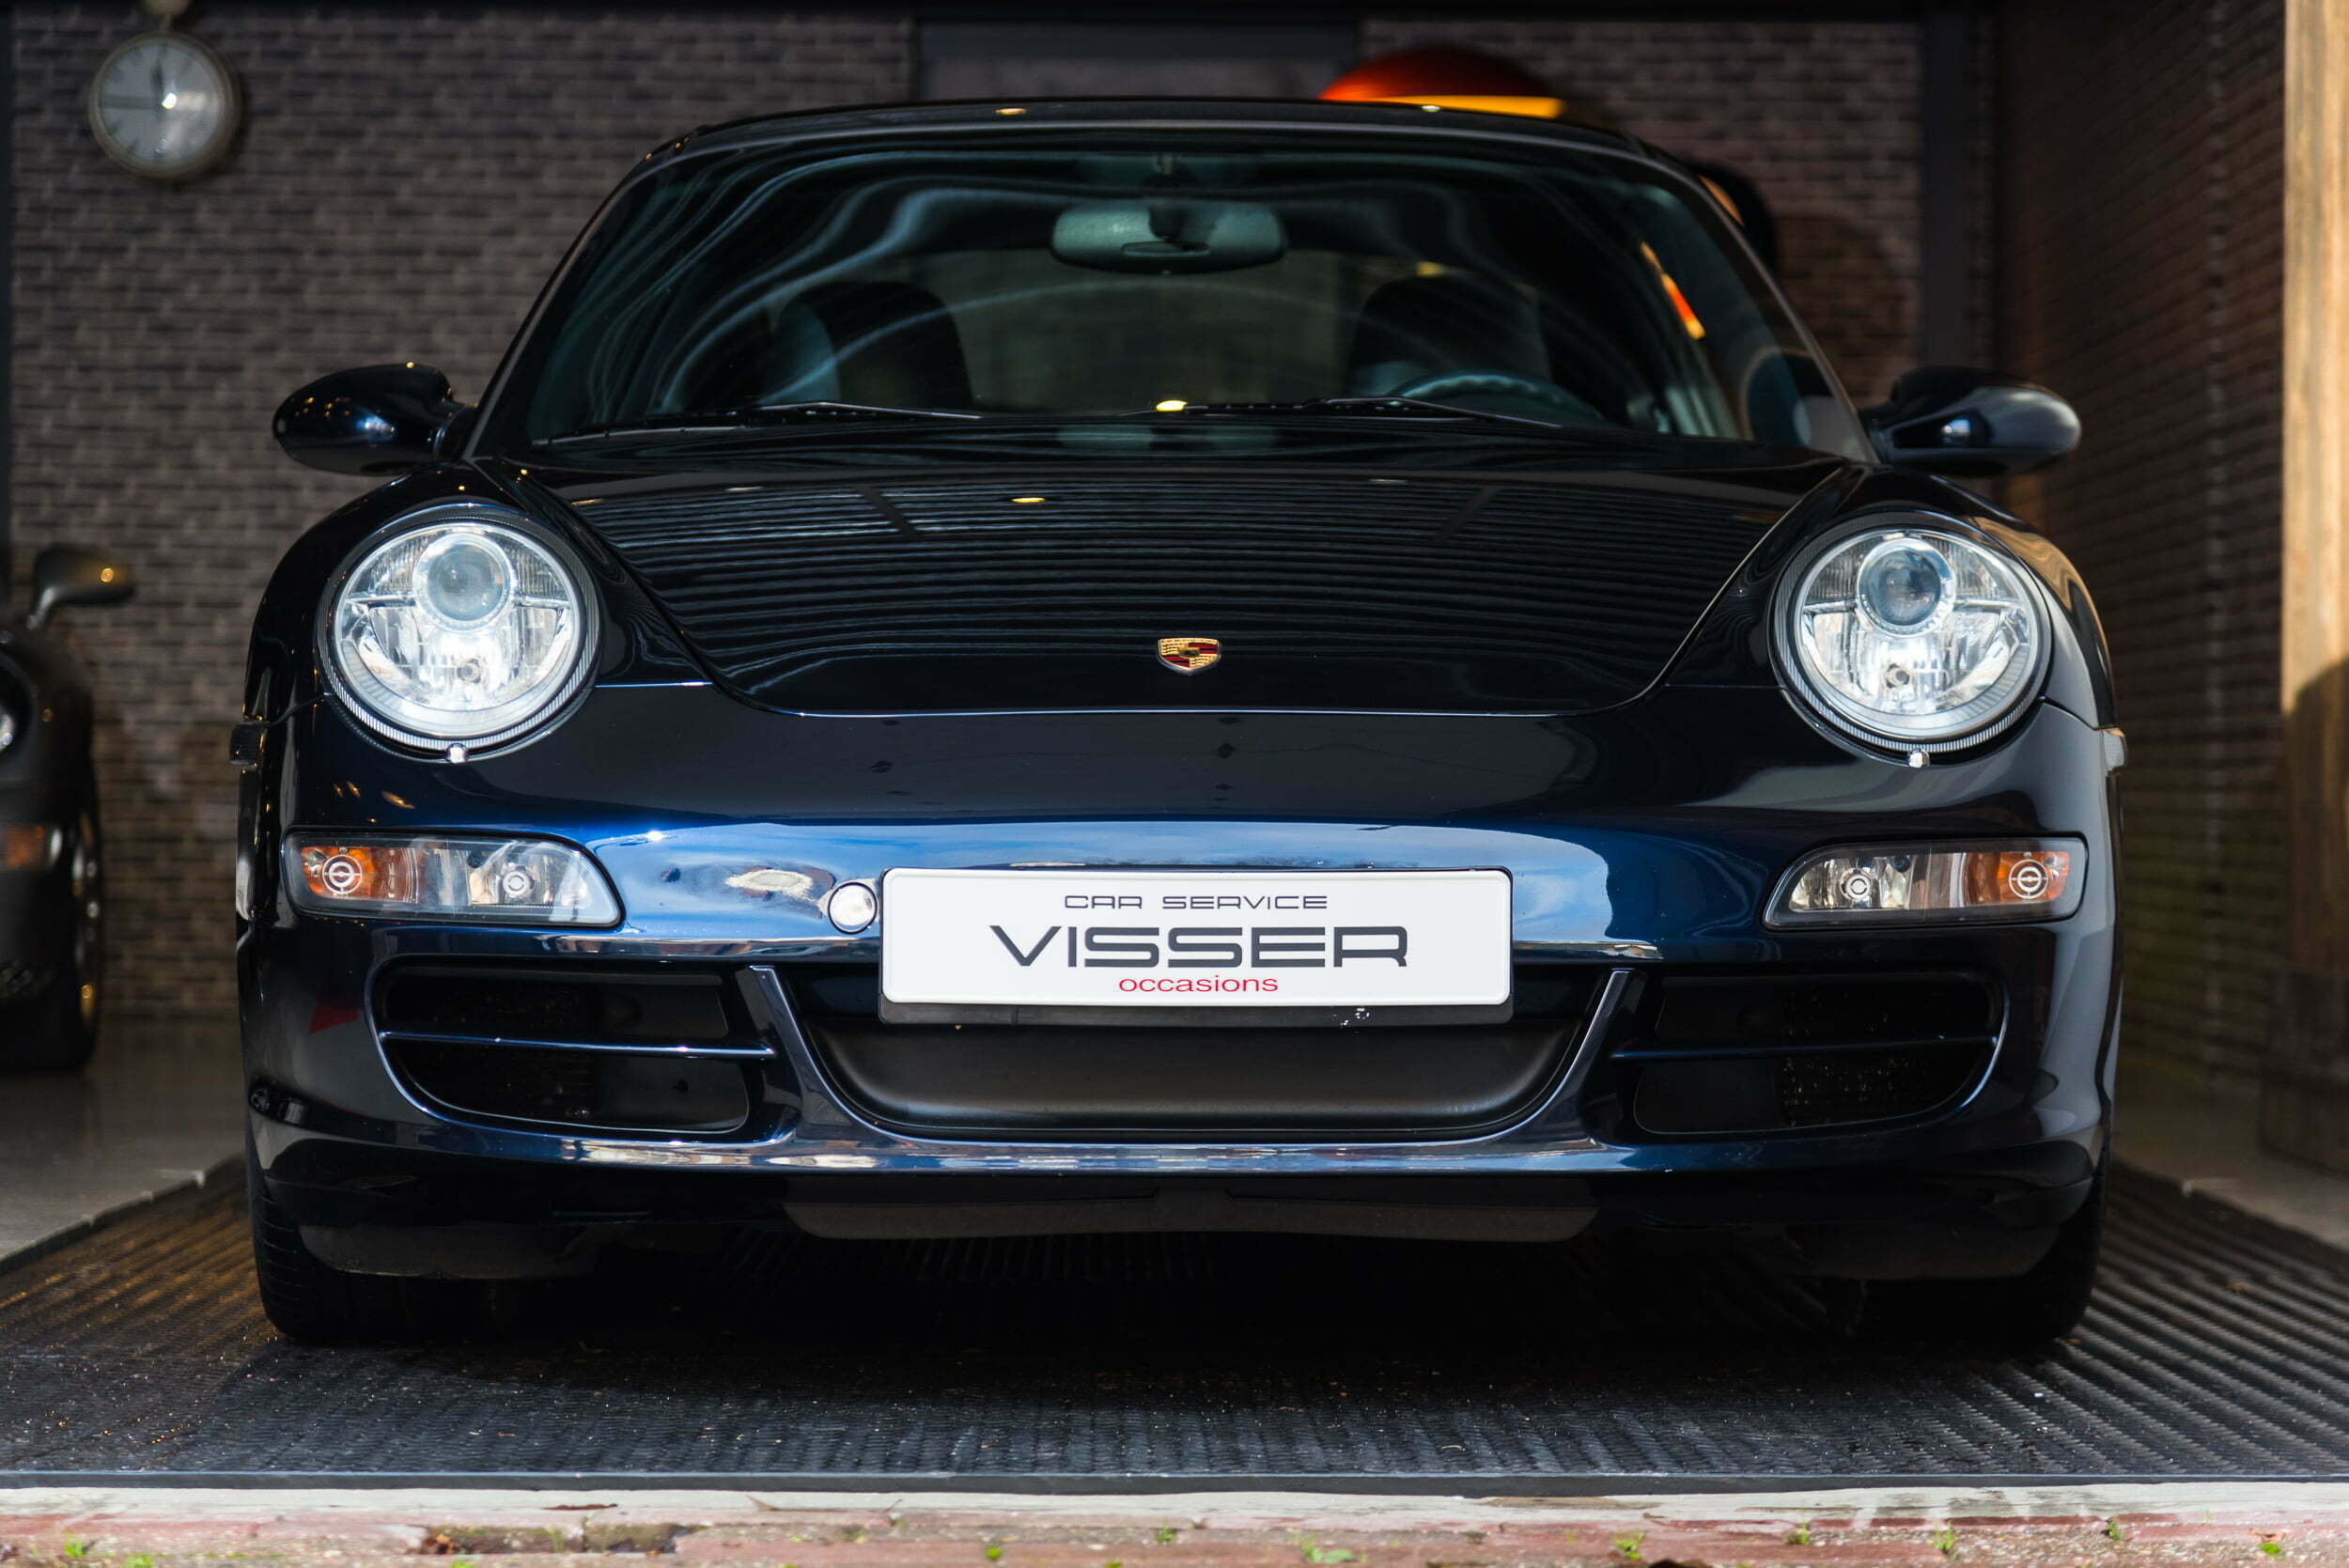 Porsche 997 S Handgeschakelde coupe nachtblau-metallic Car Service Visser Gespecialisseerd in Porsche Hilversum